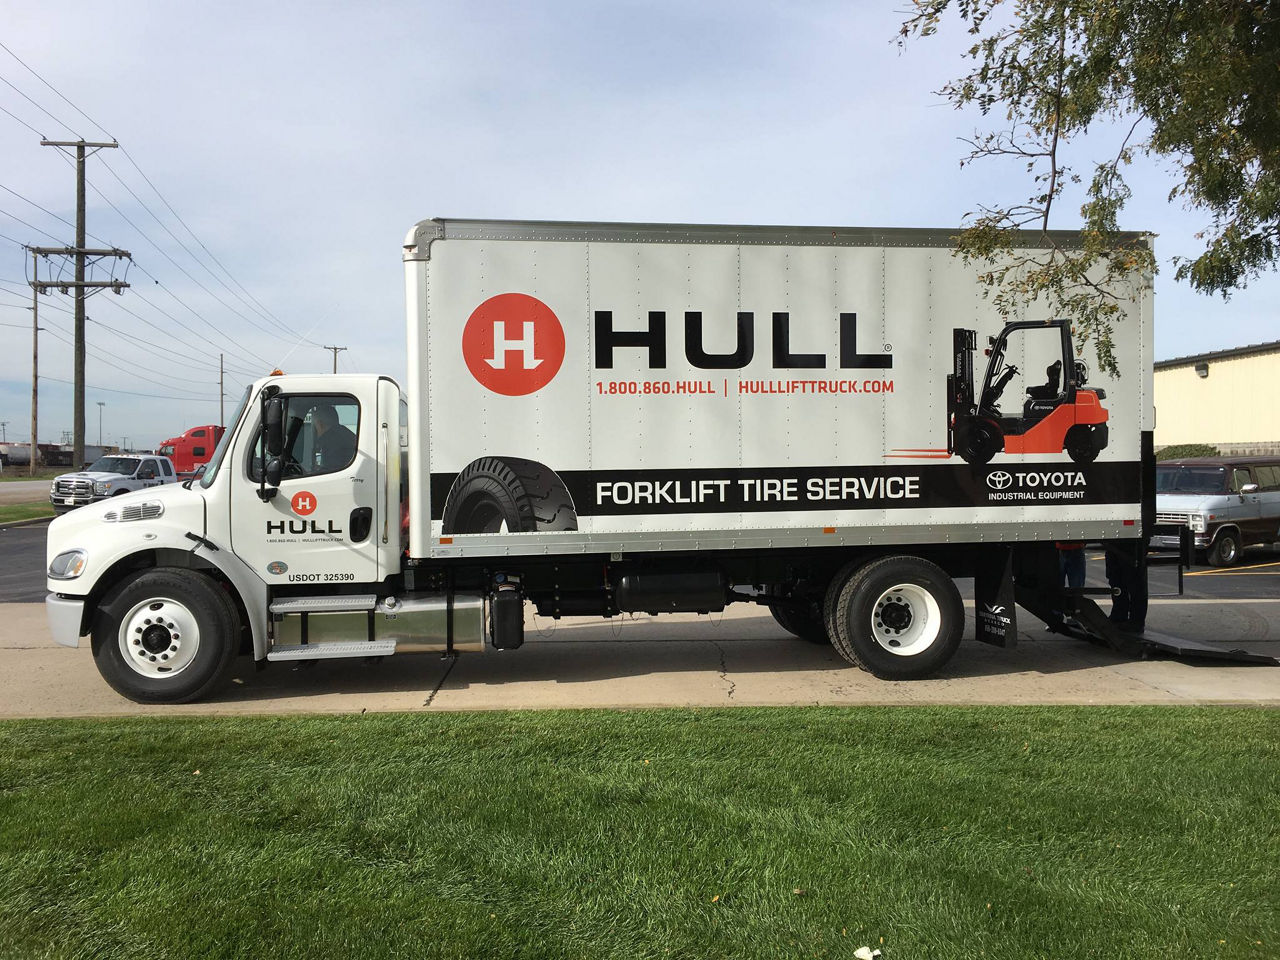 Hull Toyota Lift: Tire Service Truck